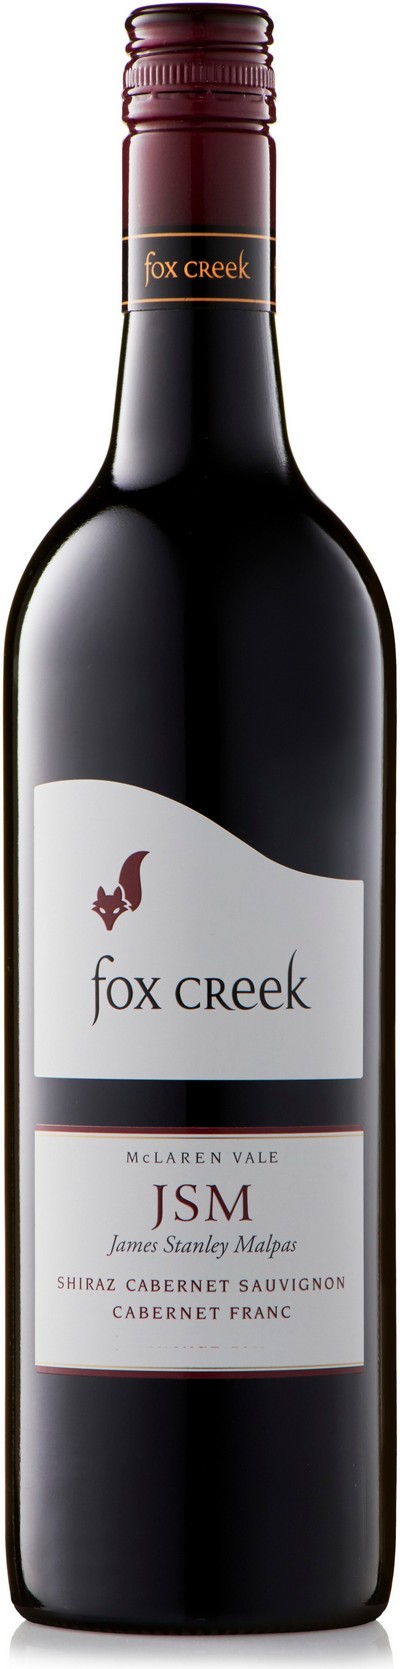 fox-creek-jsm-shiraz-cabernet-sauvignon-cabernet-franc-2018